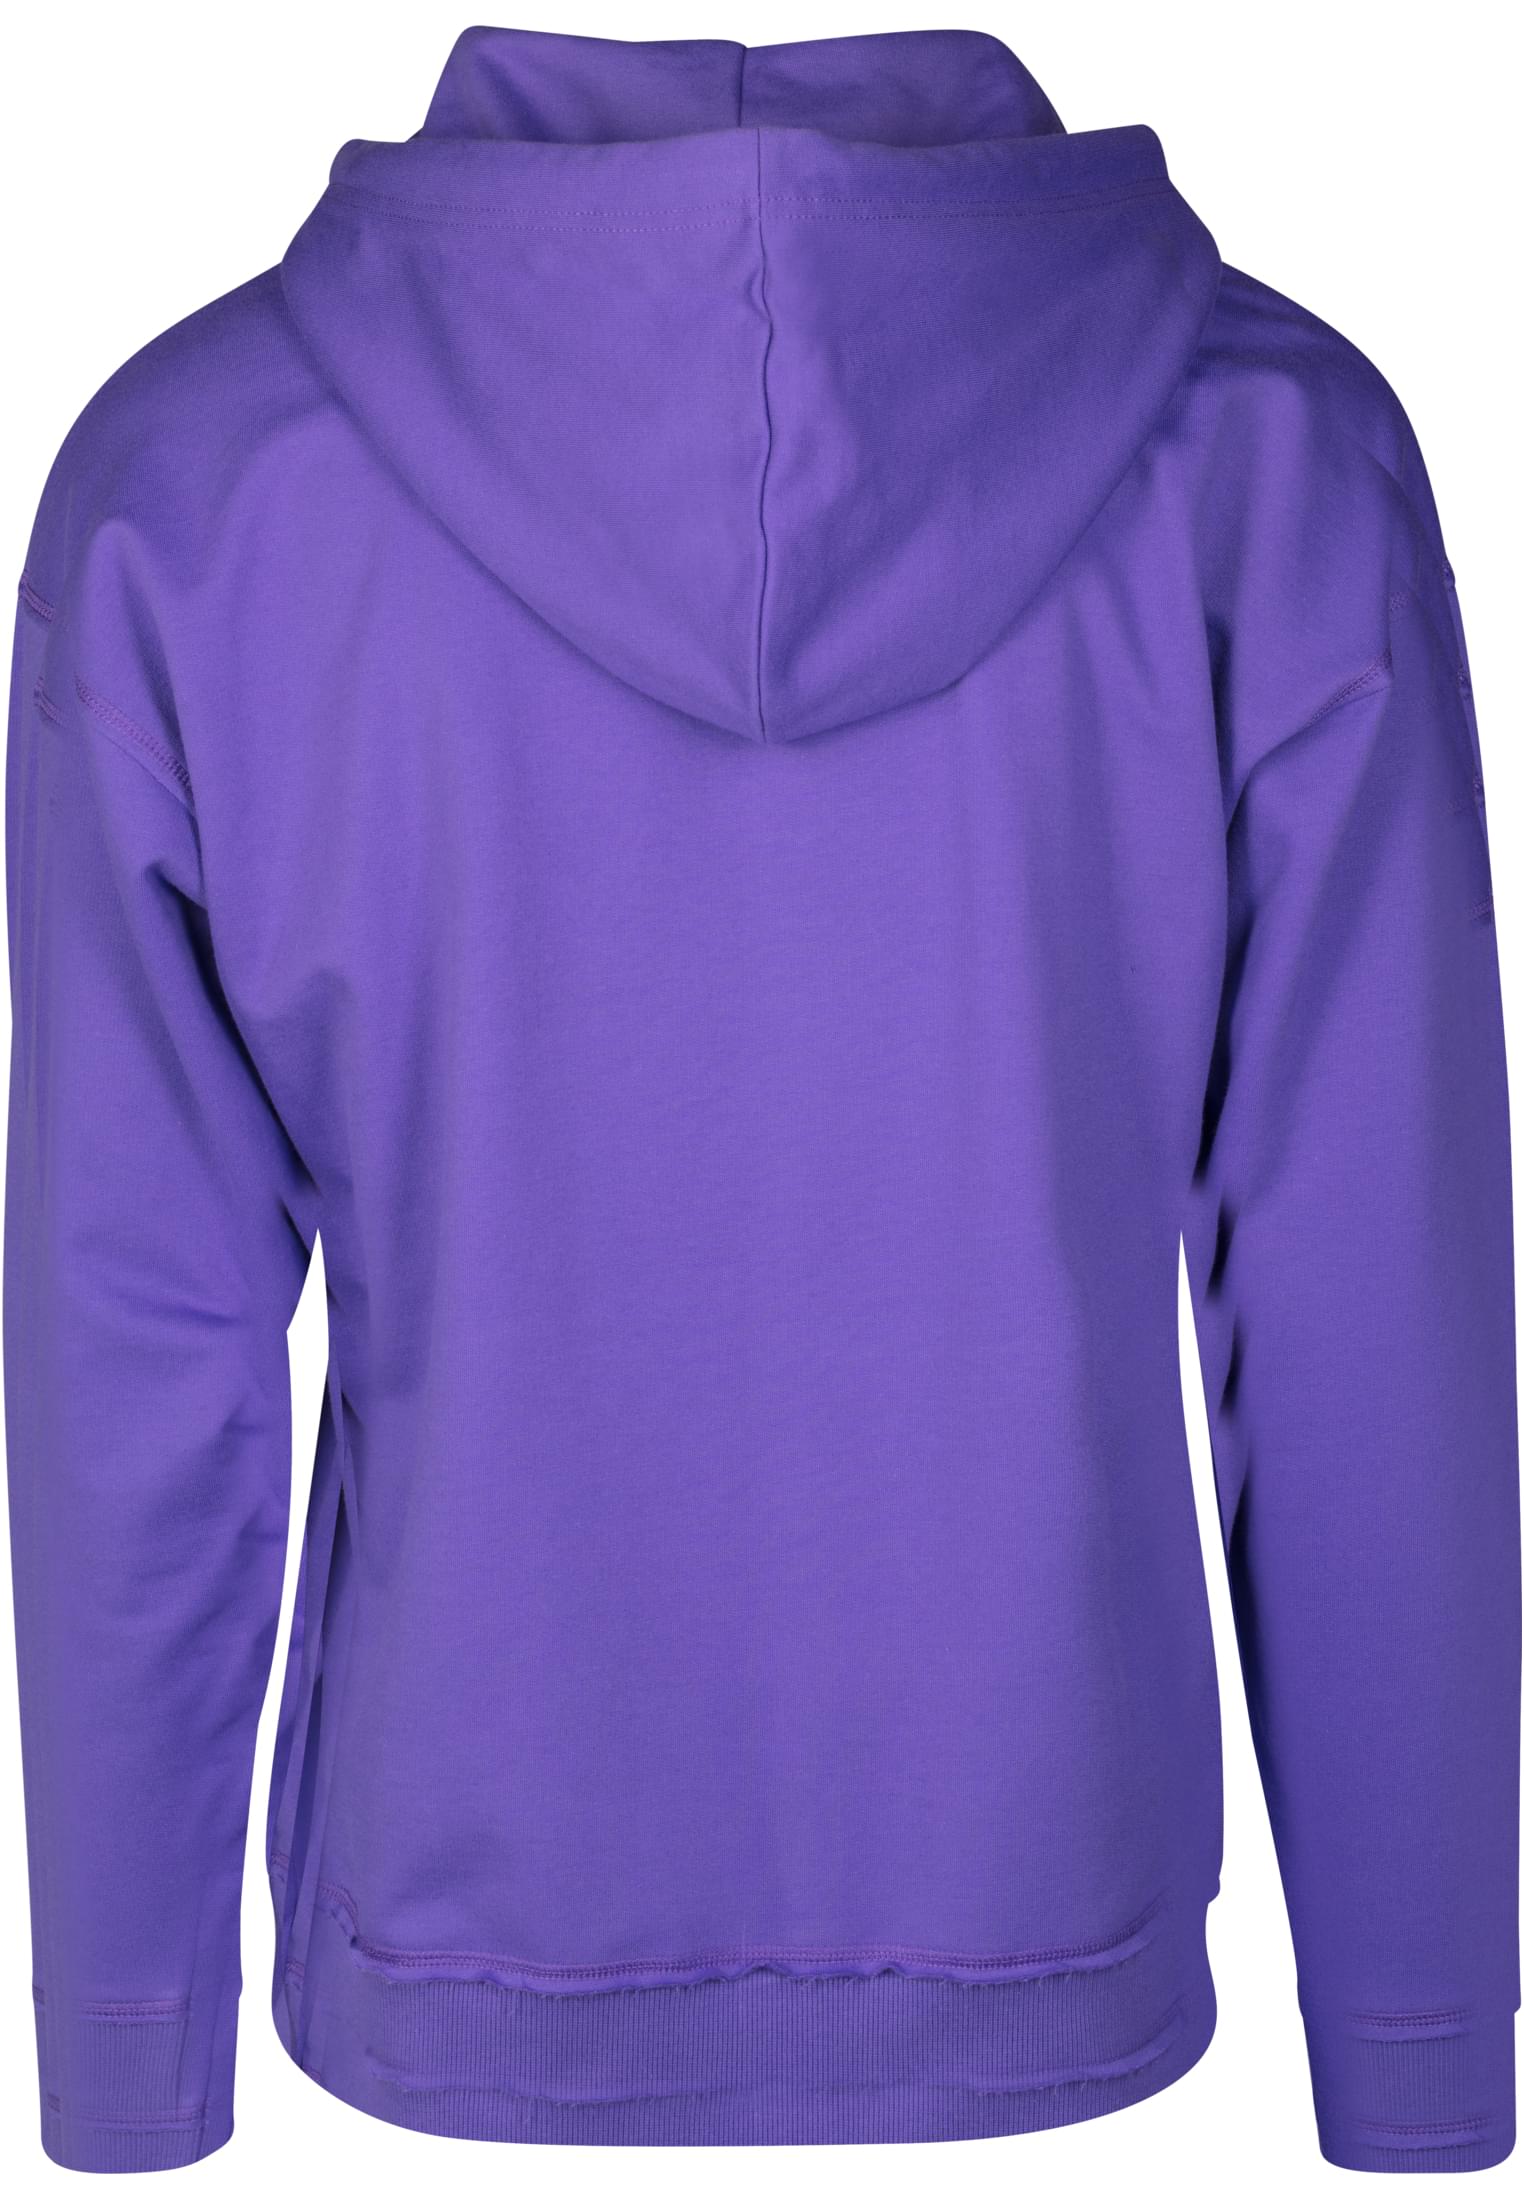 Hoodies Oversized Sweat Hoody in Farbe ultraviolet